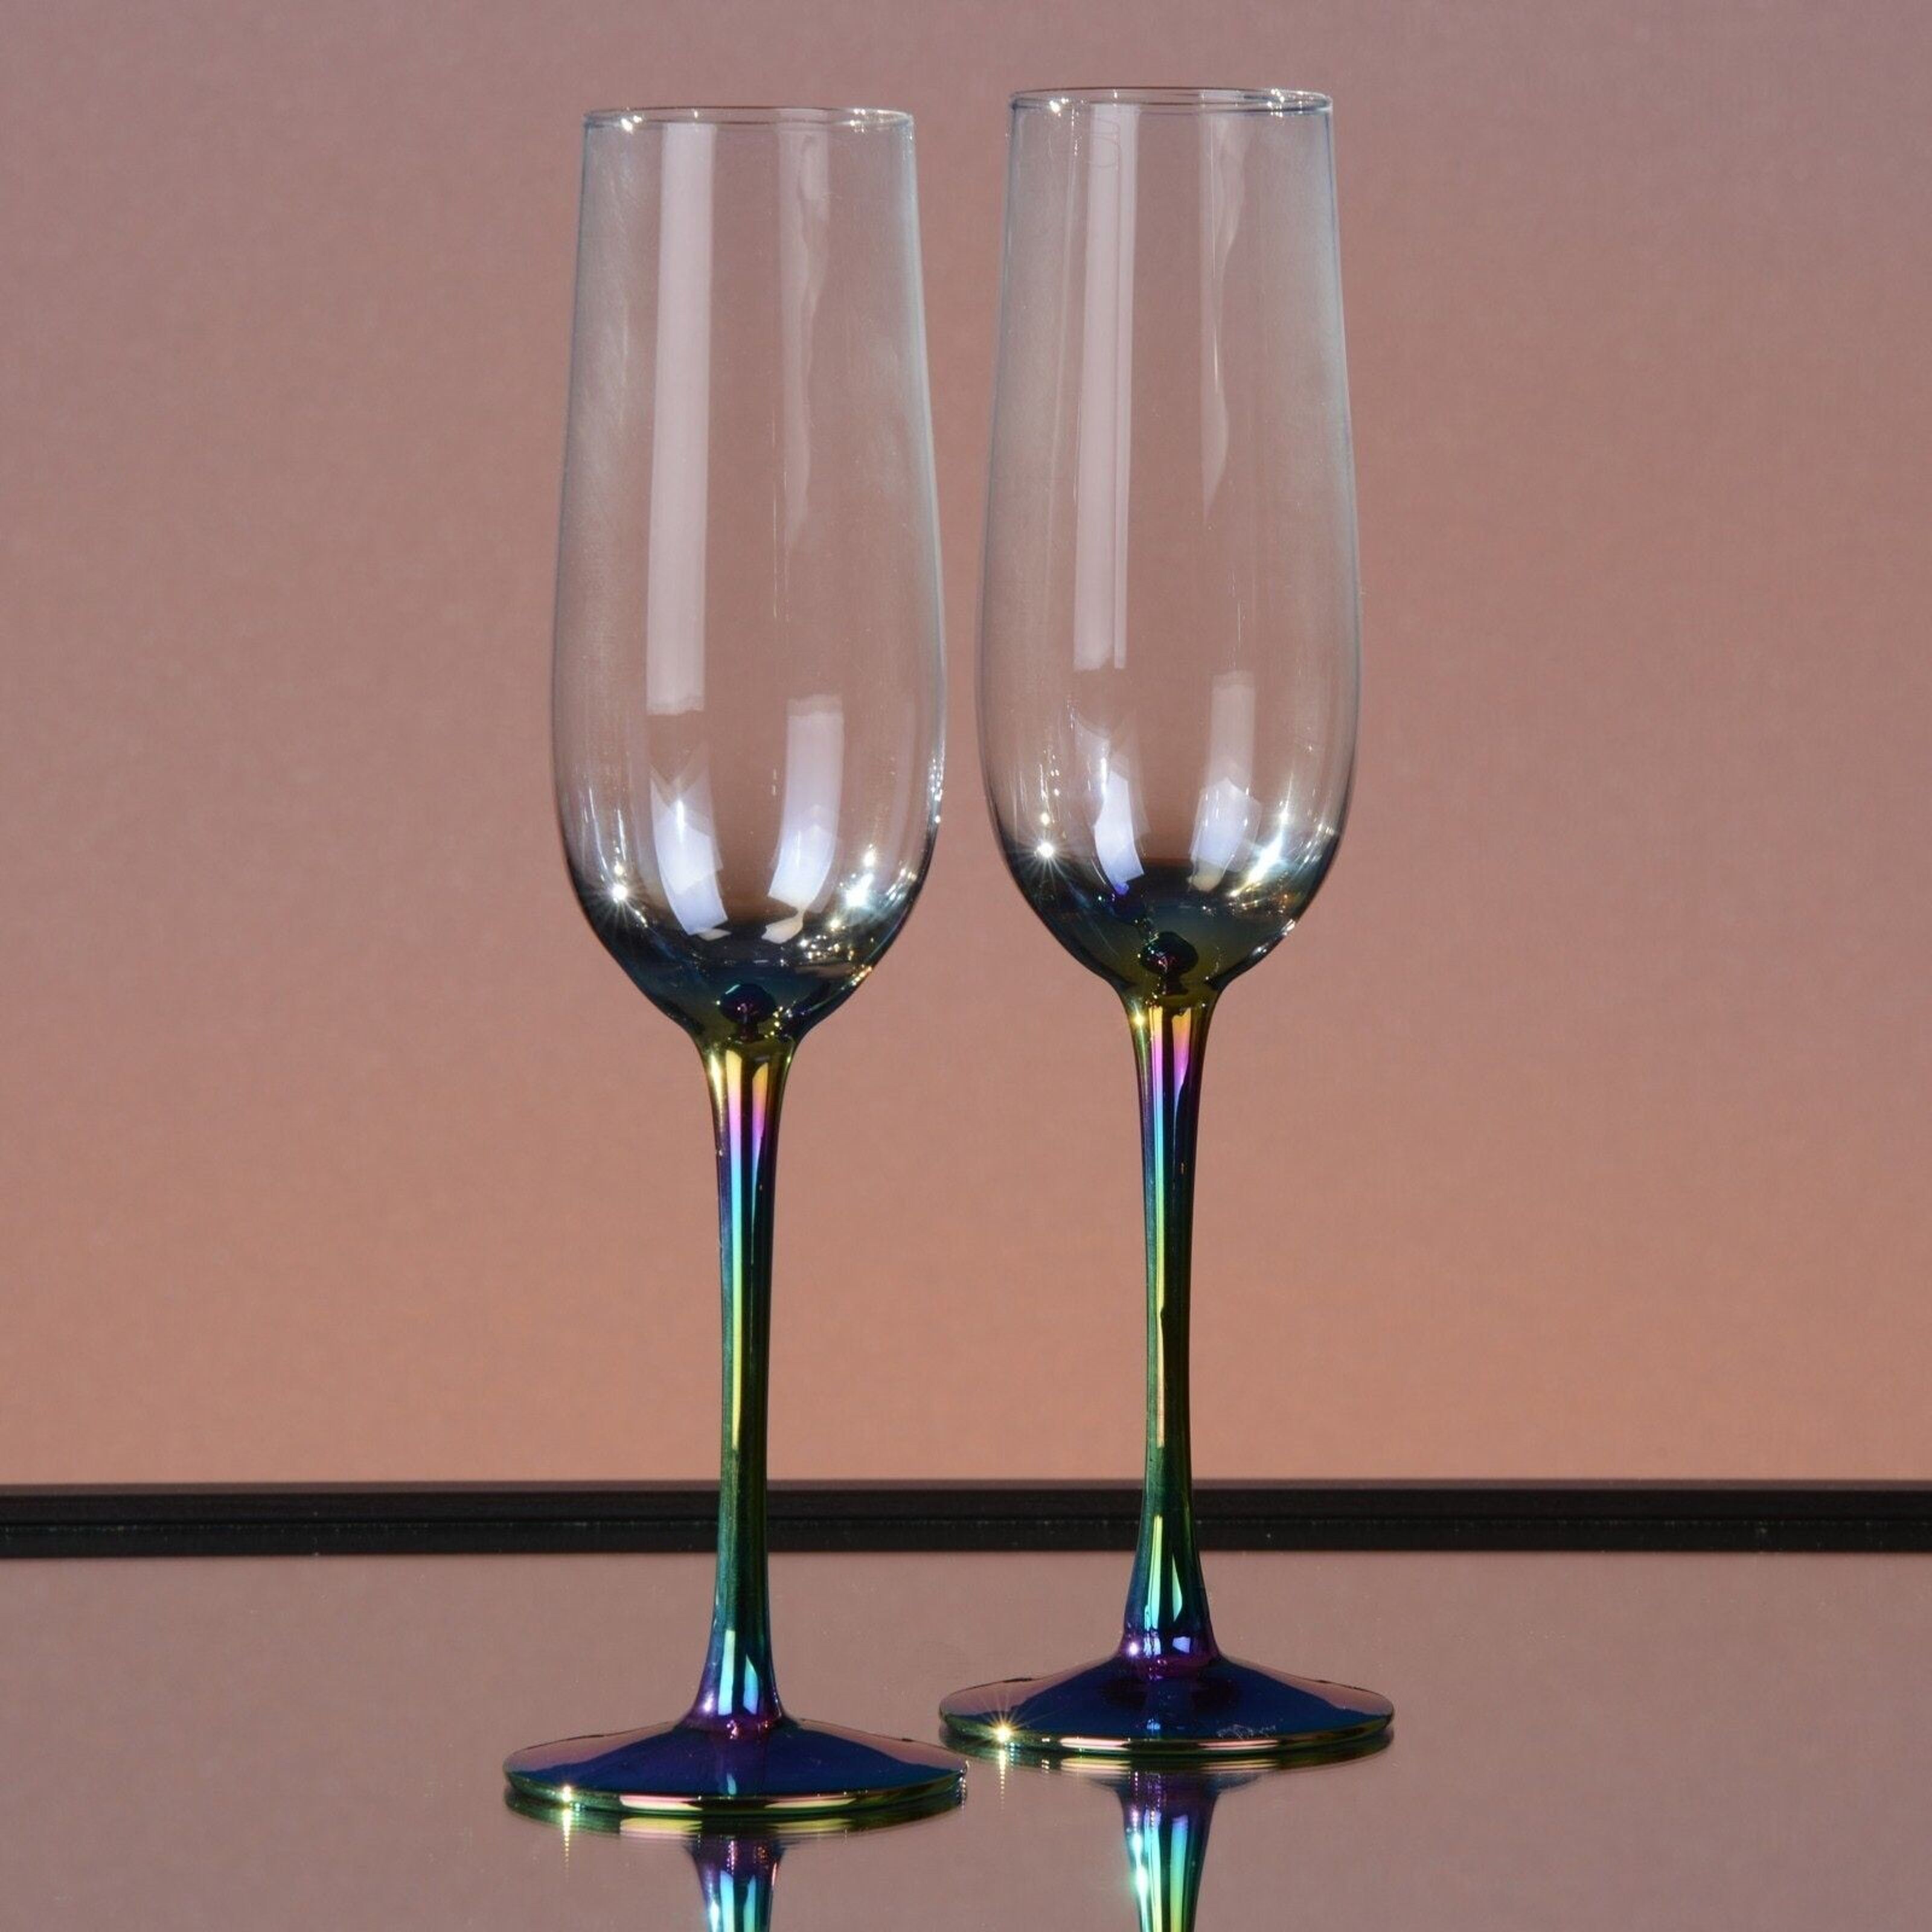 Mirage Set of 2 Champagne Glasses